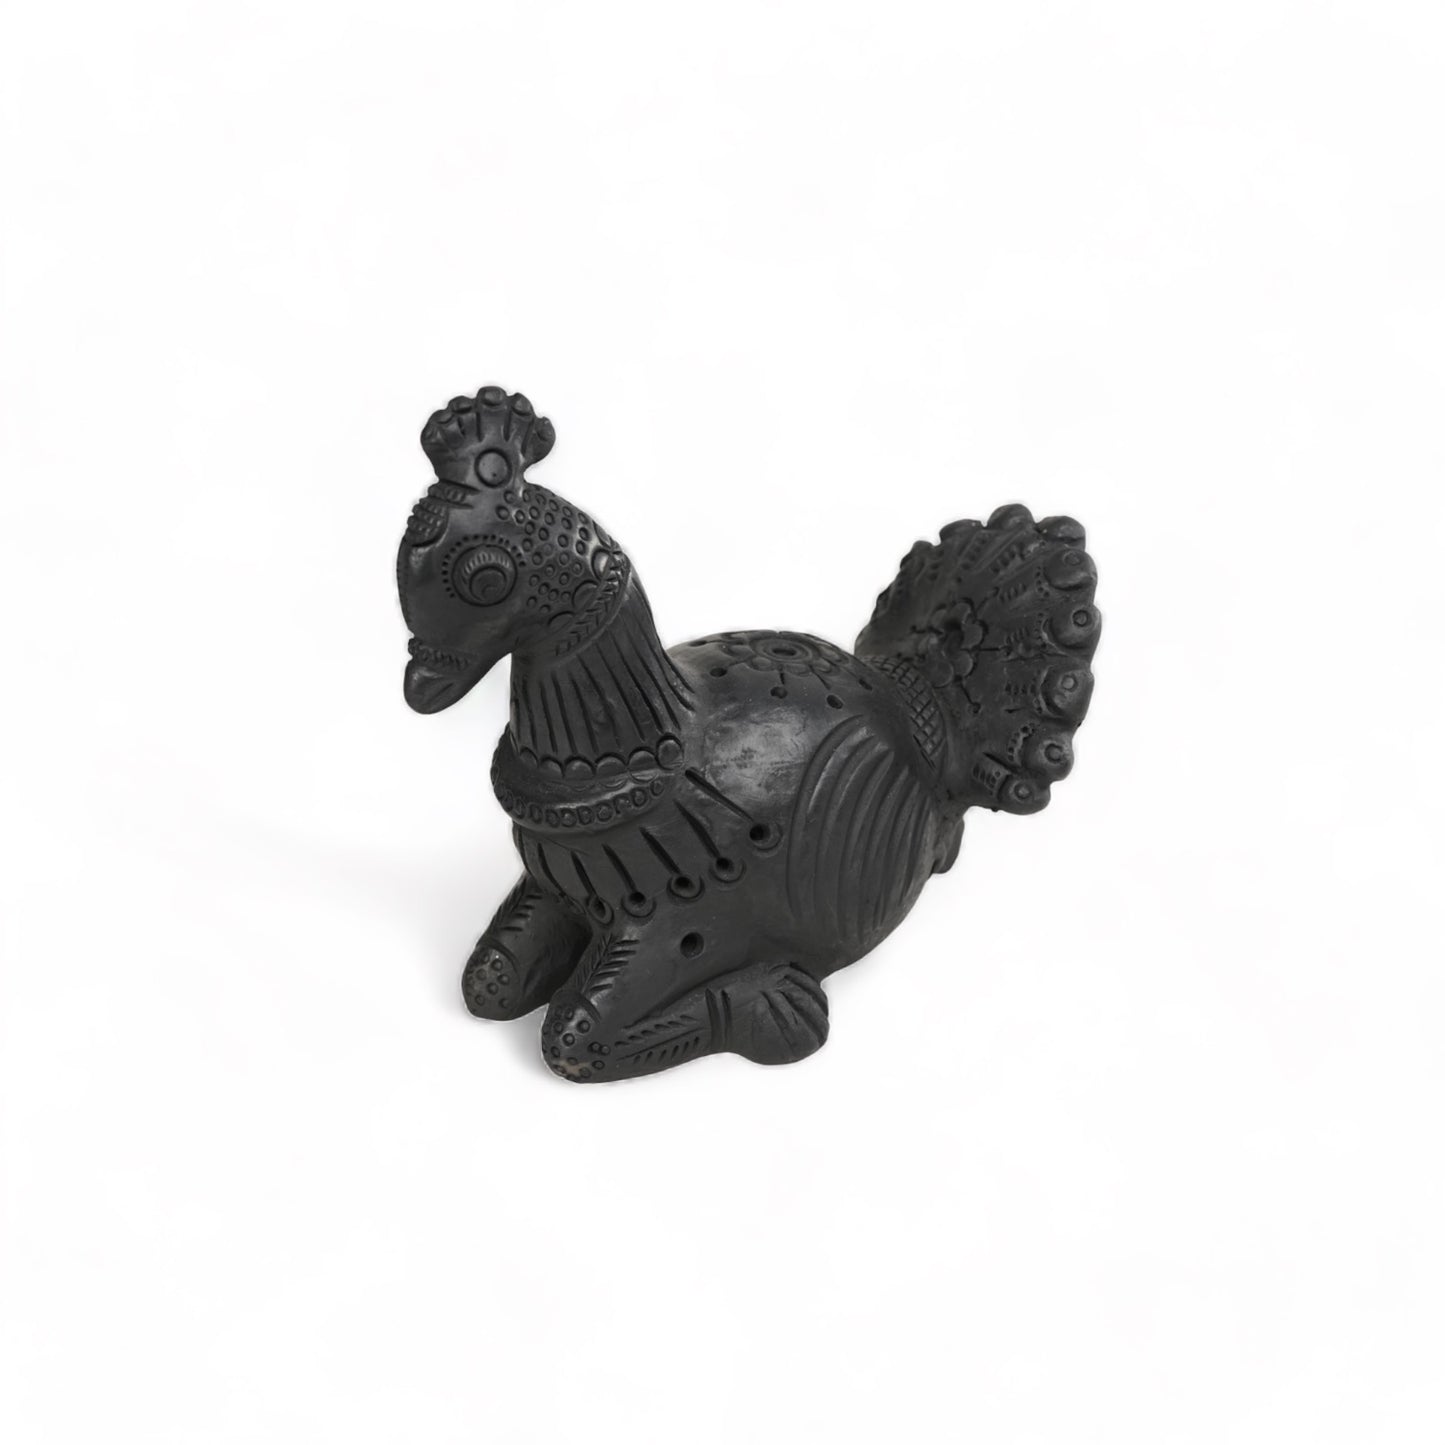 Sawai Madhopur Black Terracotta Peacock Figurine